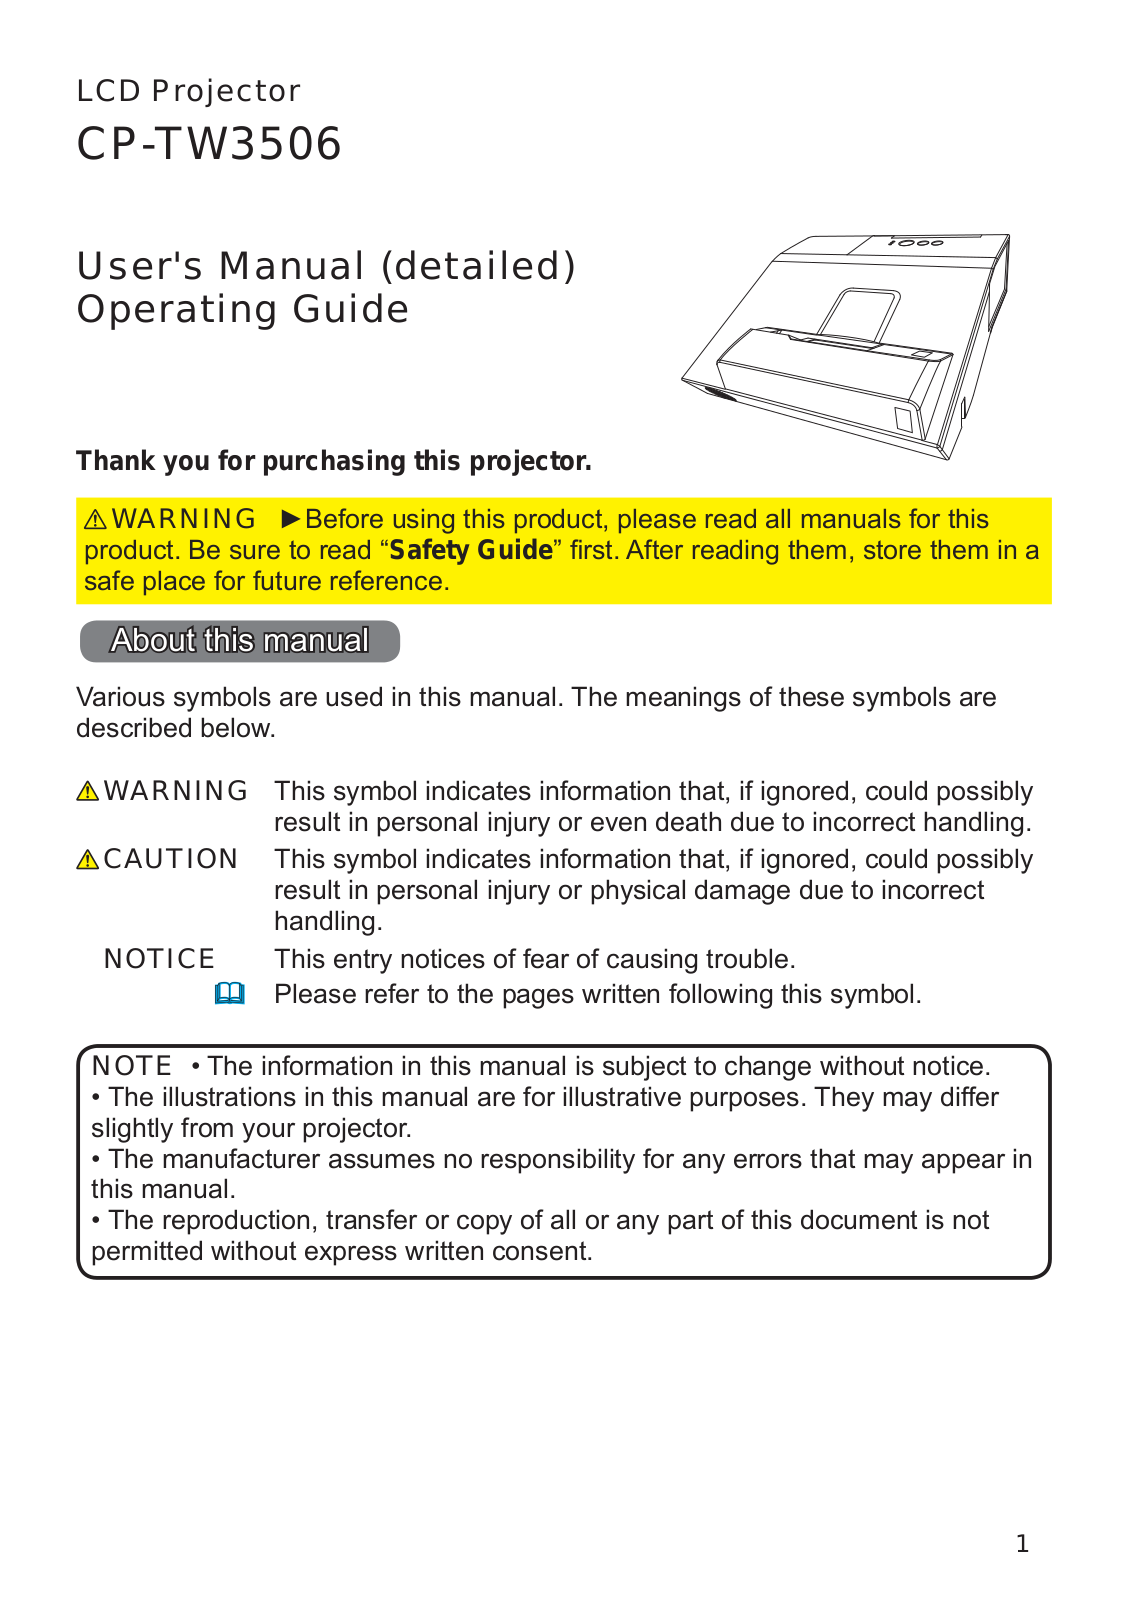 Hitachi CP-TW3506 User Manual